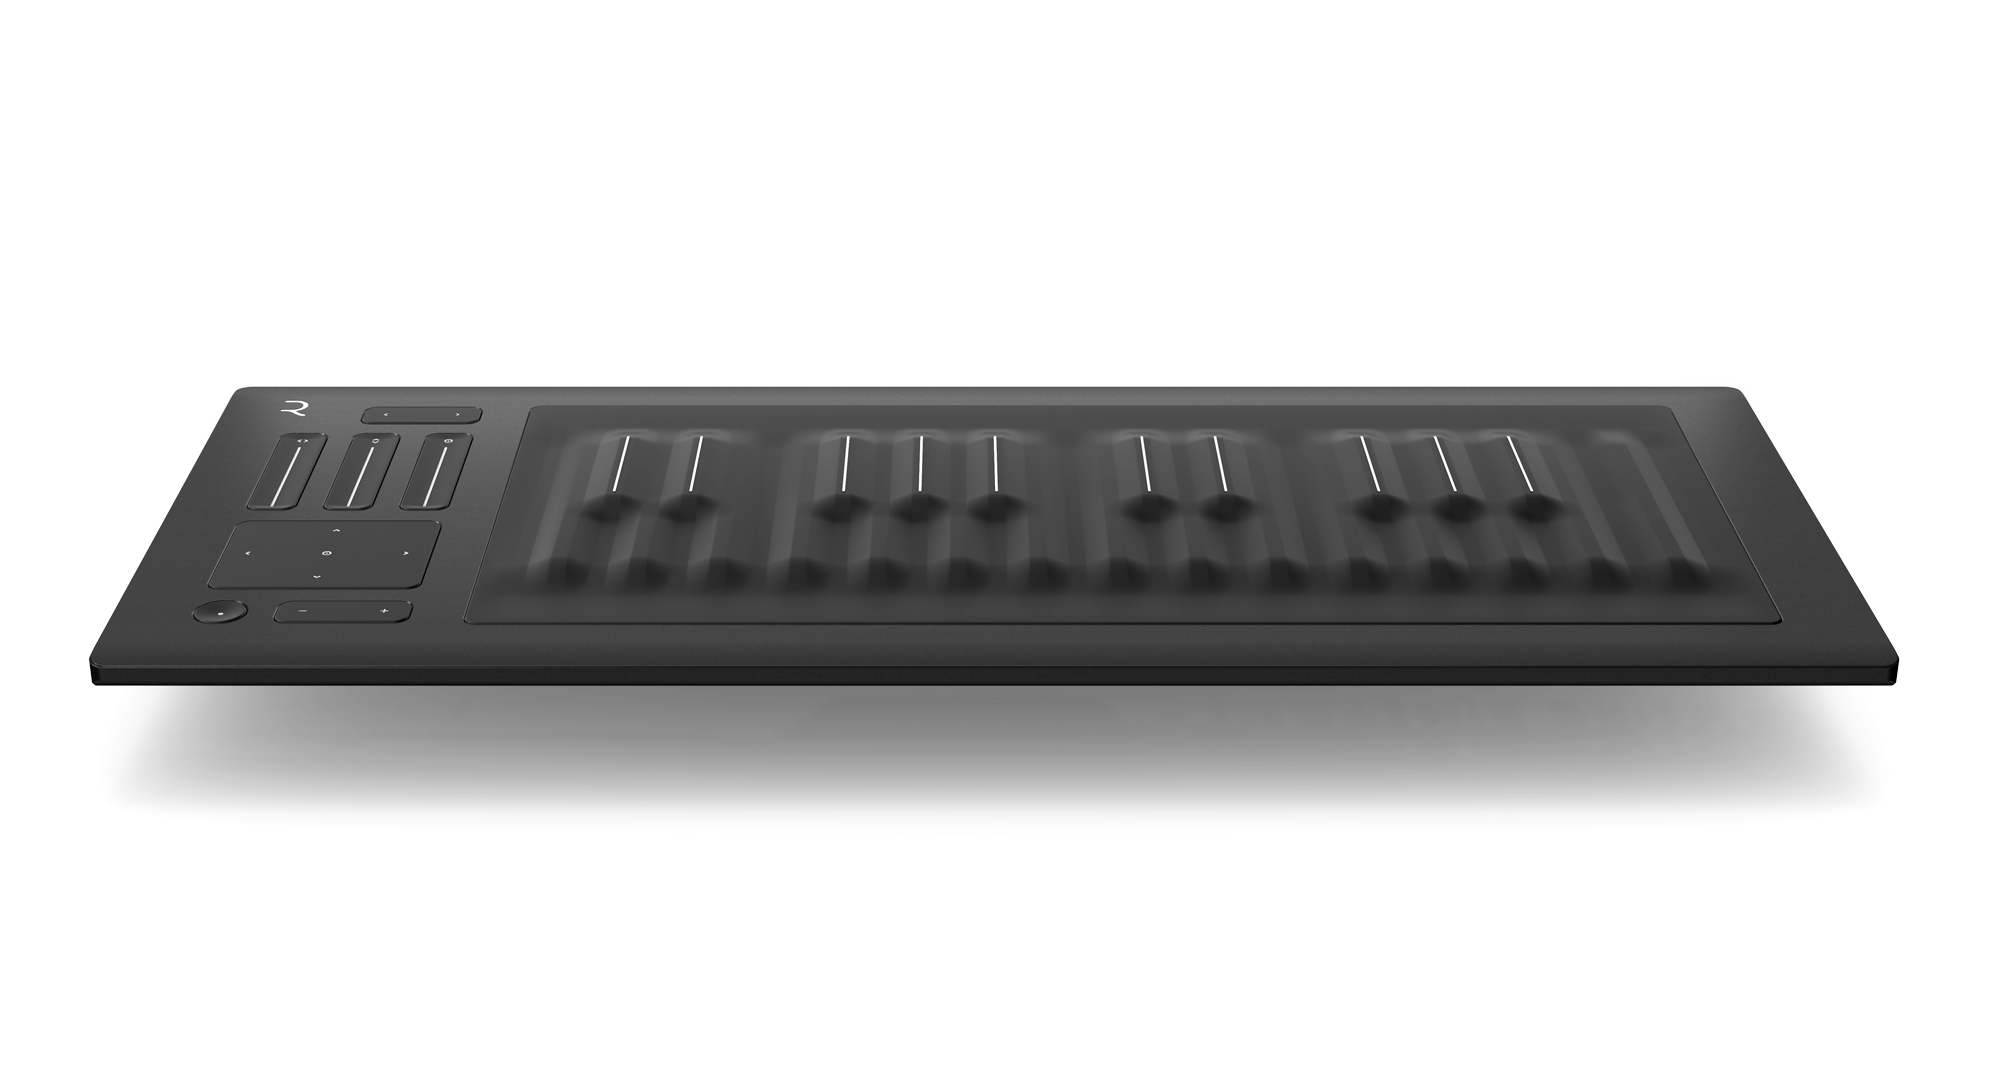 ‘Seaboard’ the Pressure Sensitive Digital Keyboard That Changes the Game